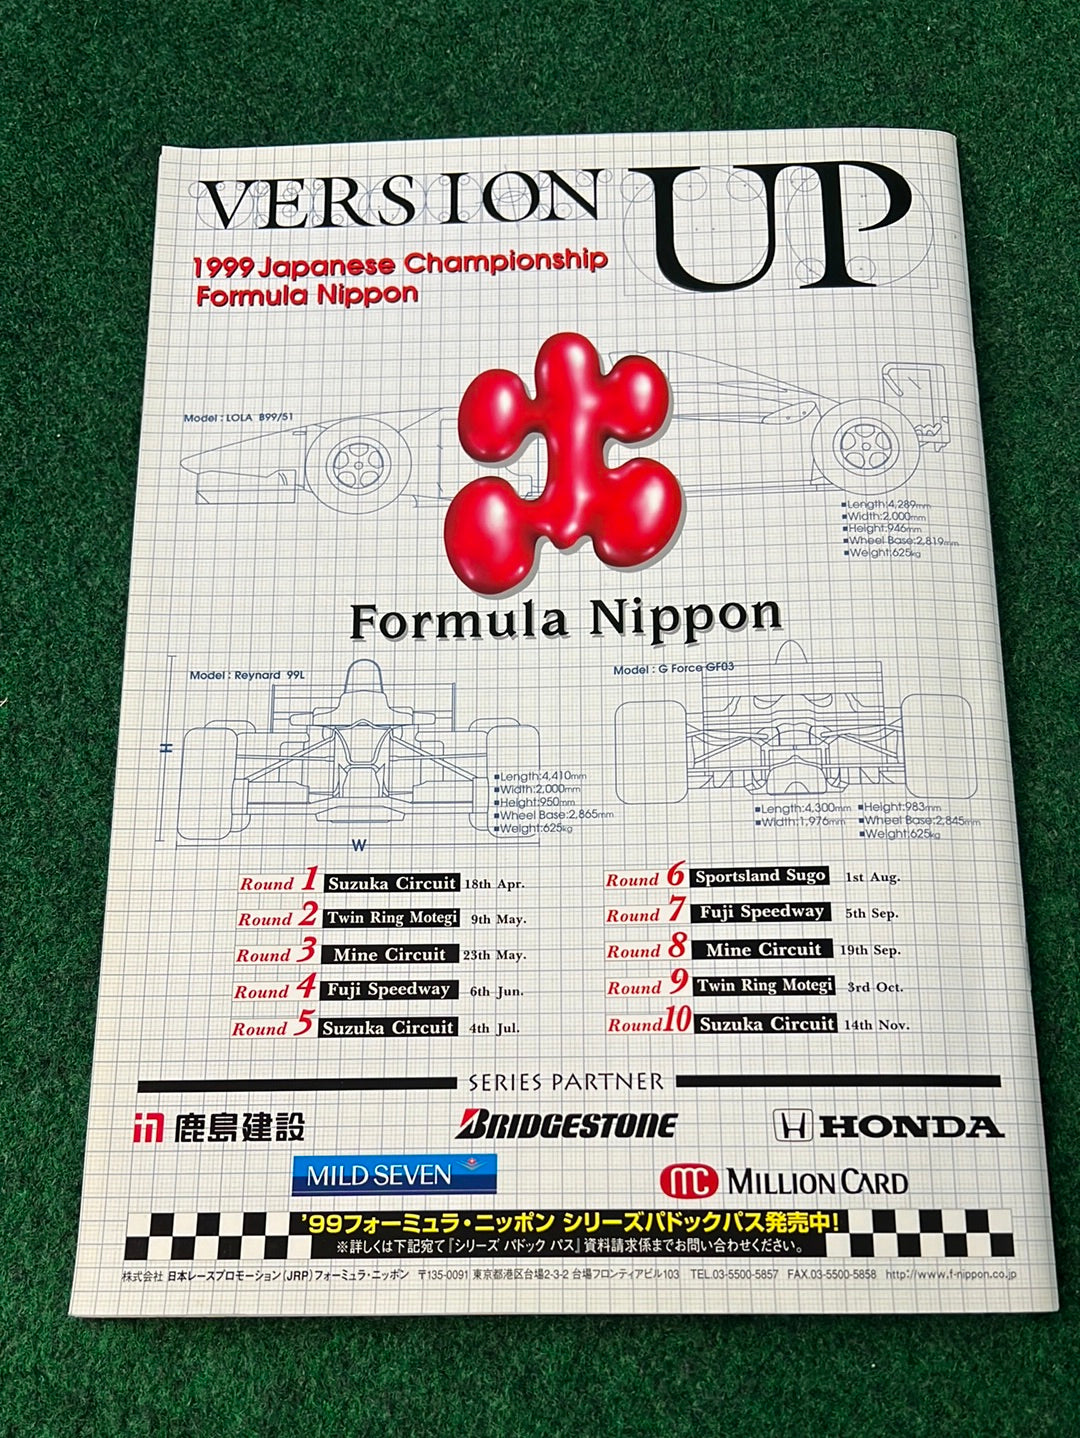 Formula Nippon - 1998 & 1999 Suzuka Circuit Race Event Programs Set of 3